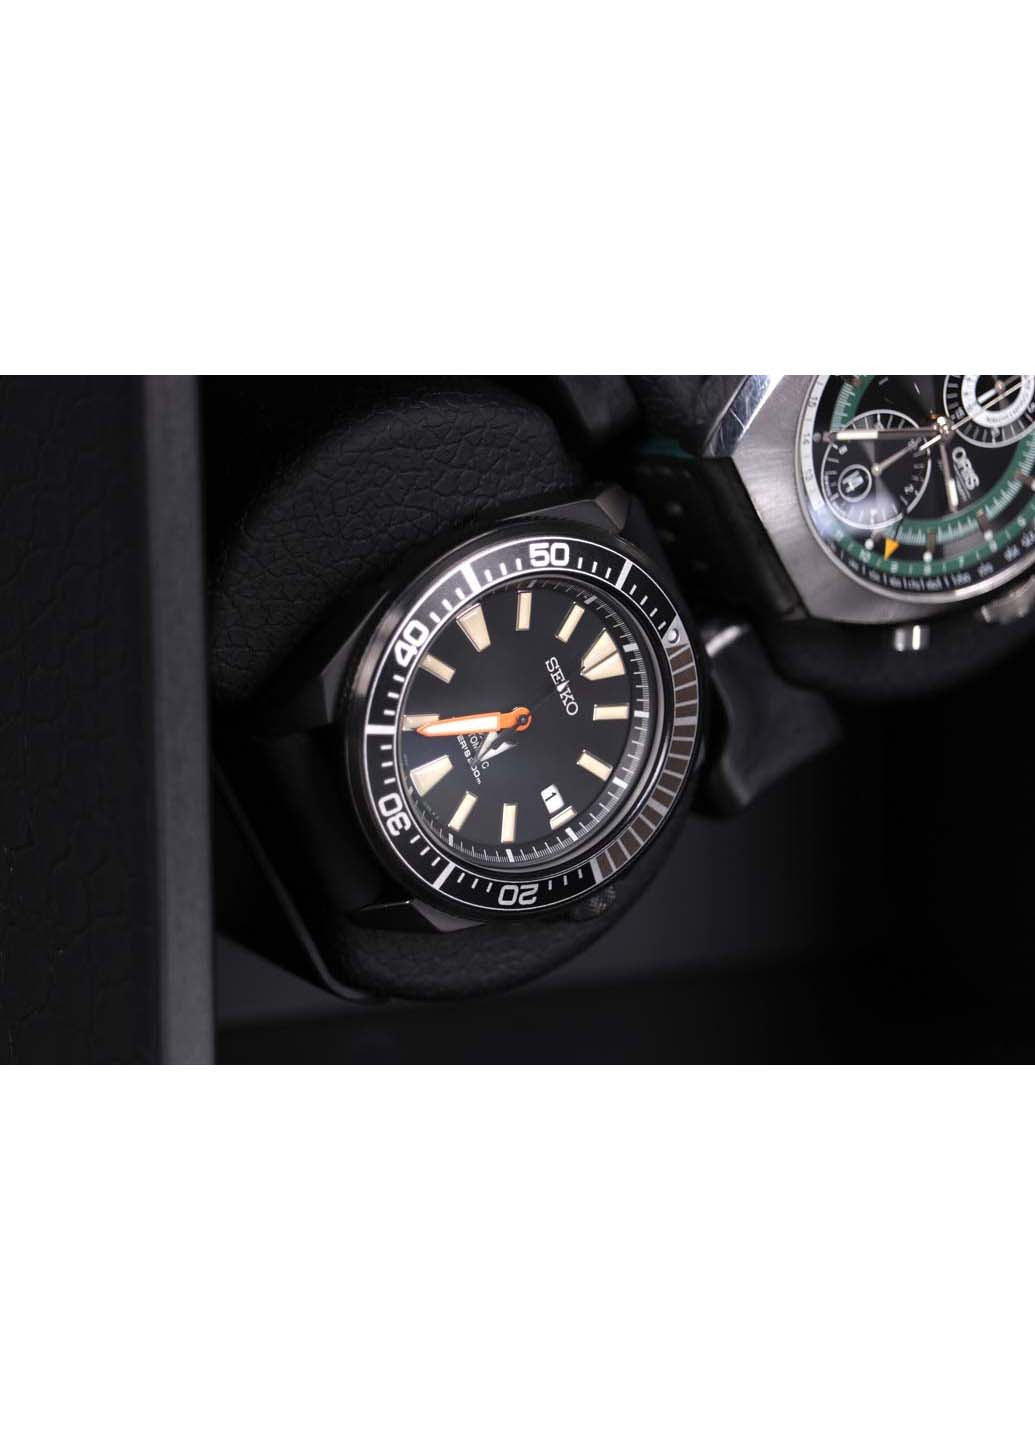 Часы Prospex Samurai The Black Series Limited Edition SRPH11K1 Seiko (270932533)